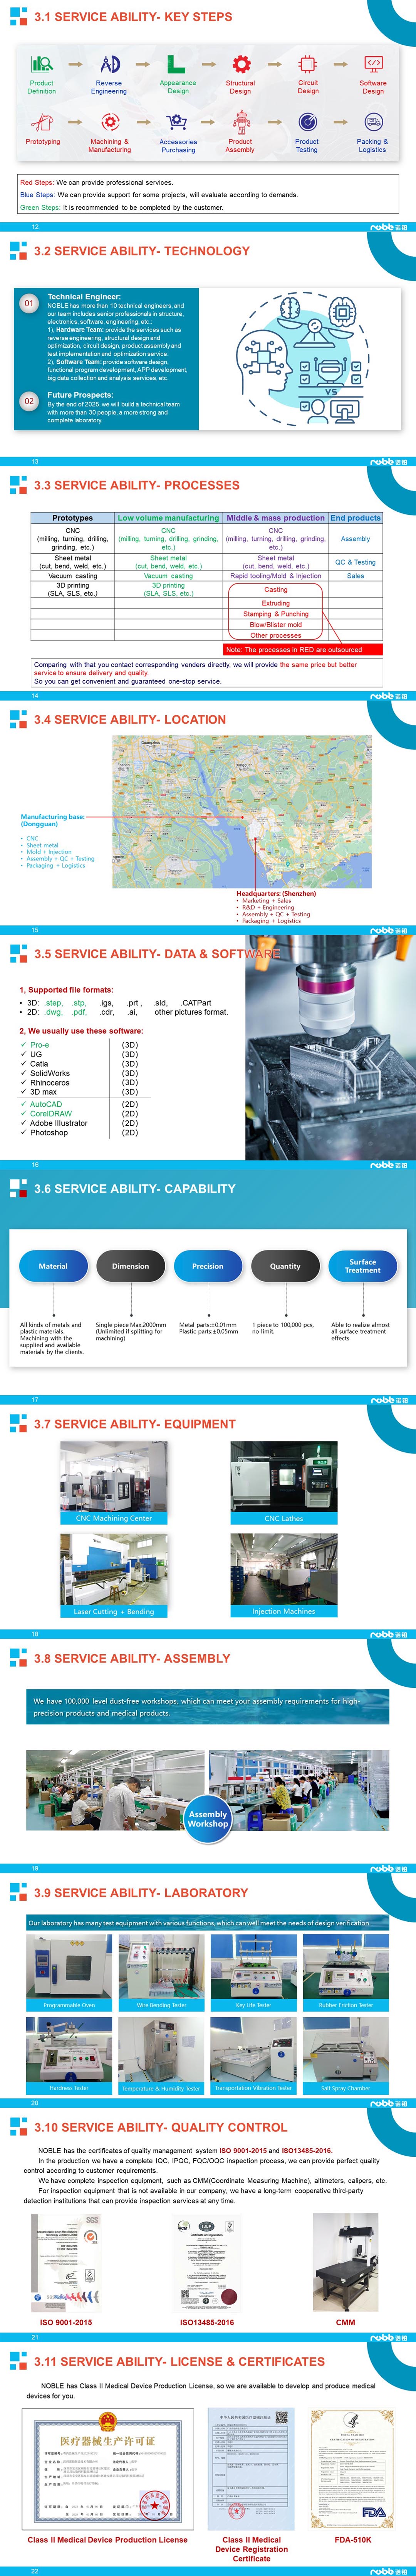 CNC machining capabilities3.1-3.11